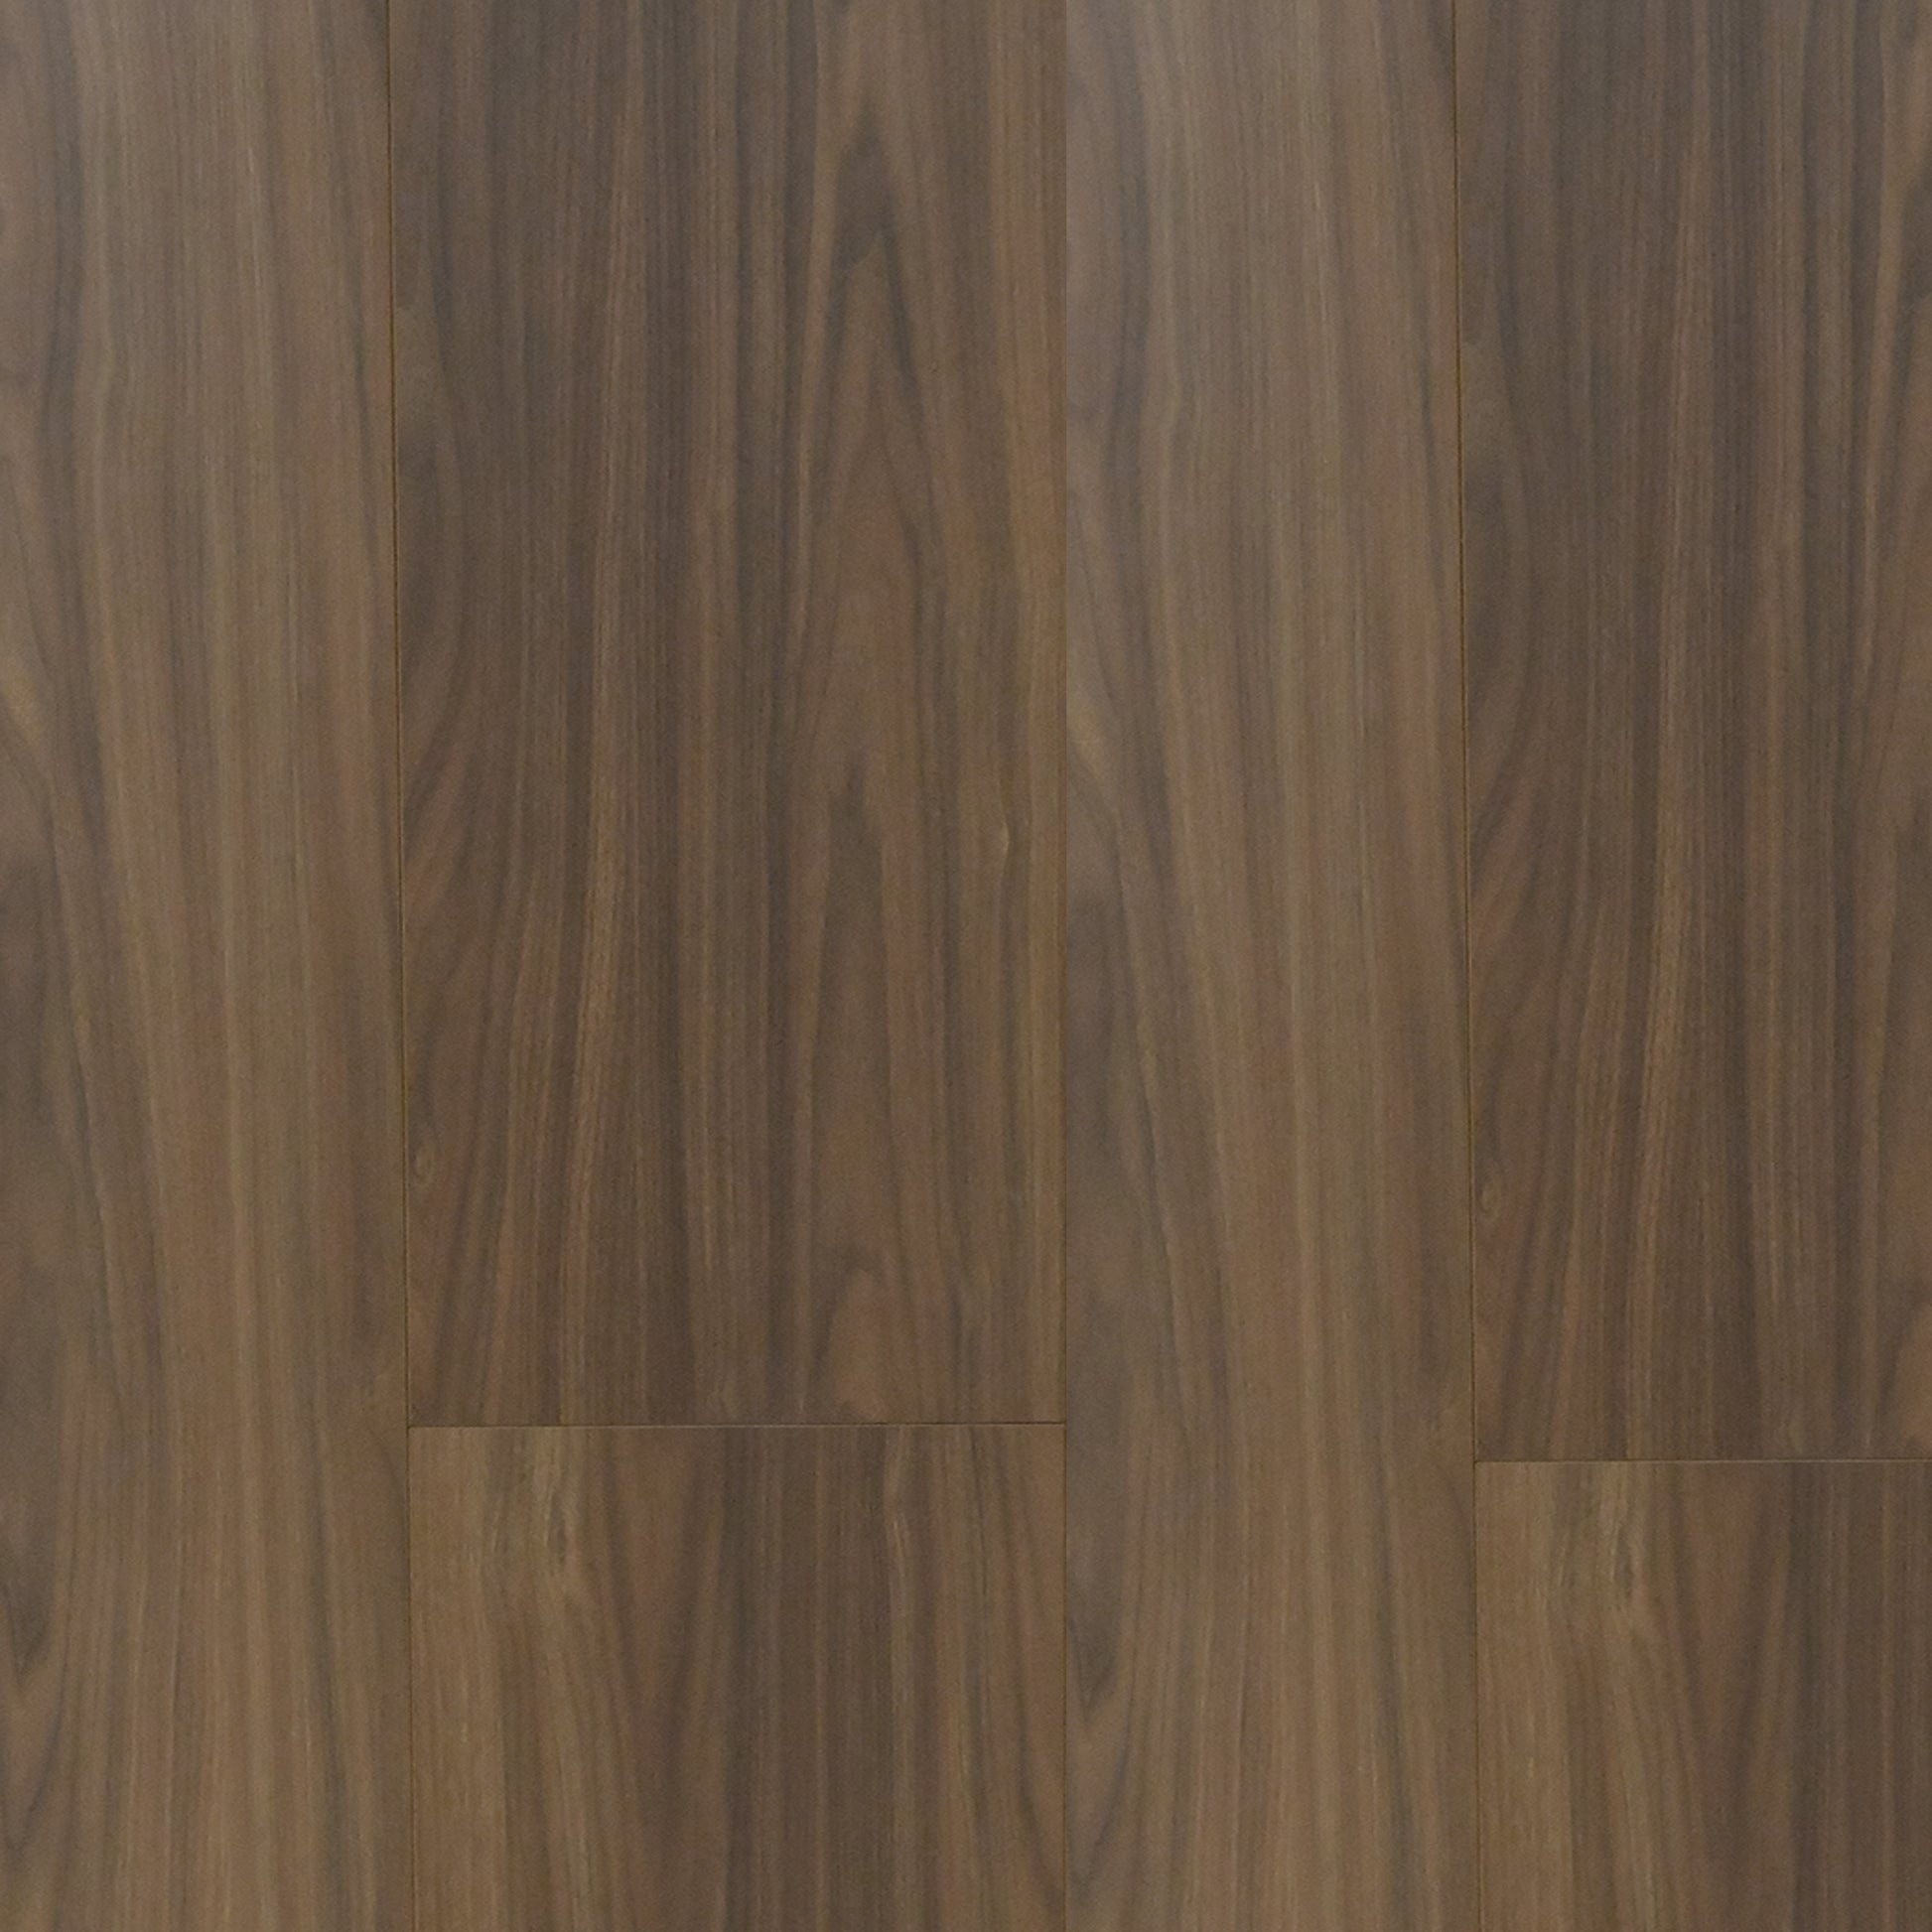 Brown Oak Laminate Flooring by KLD Home